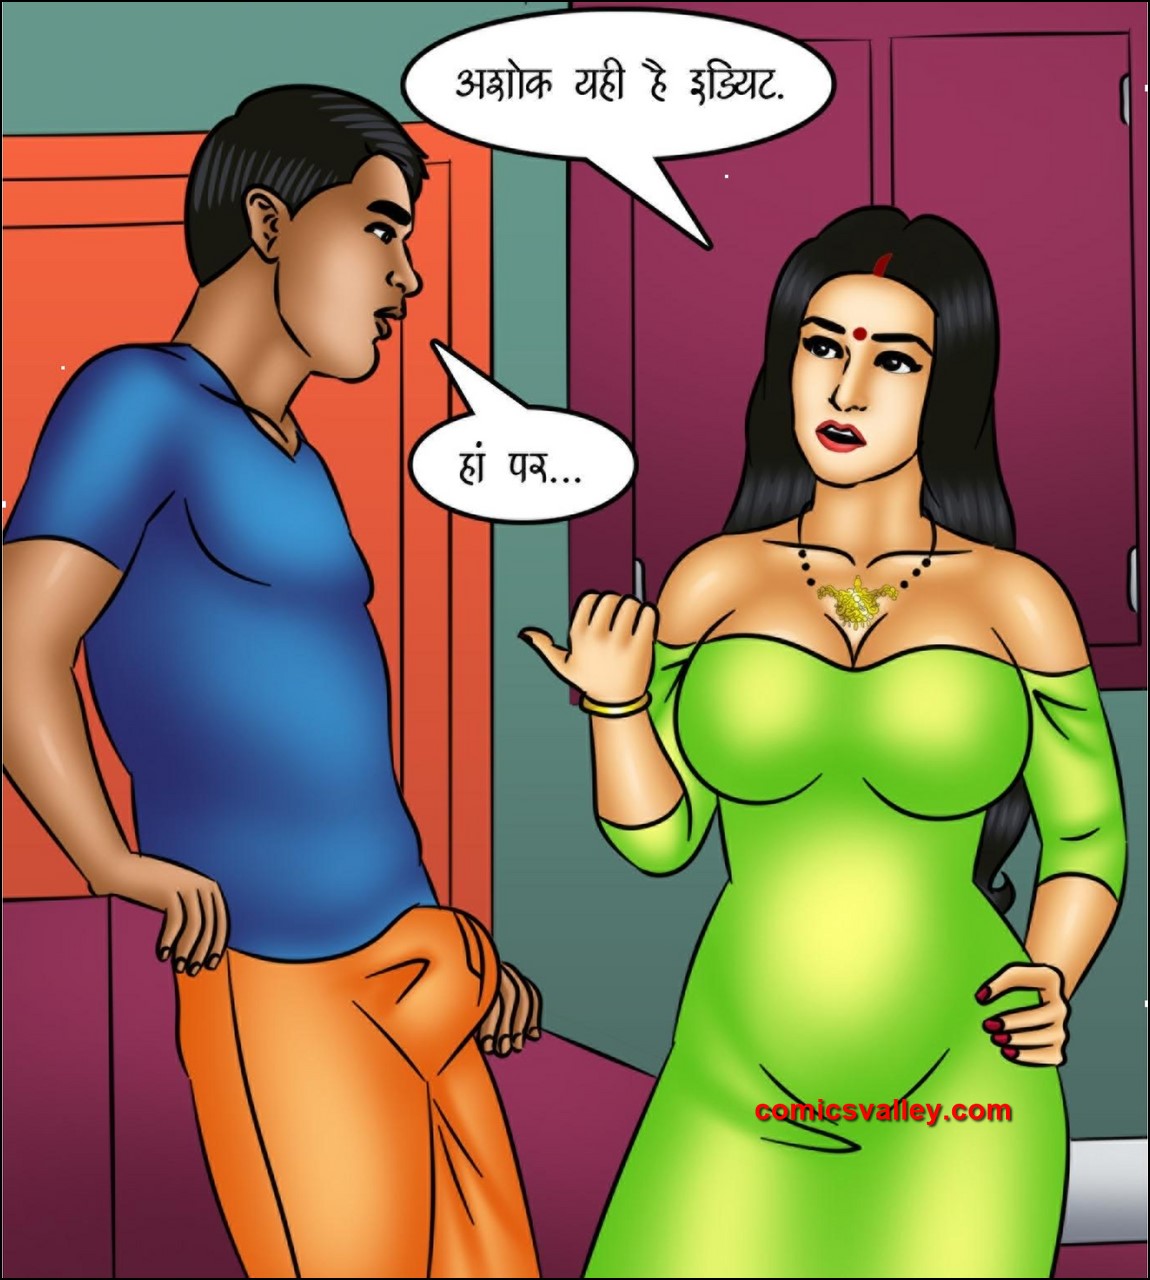 Savita bhabhi cartoon comics in hindi